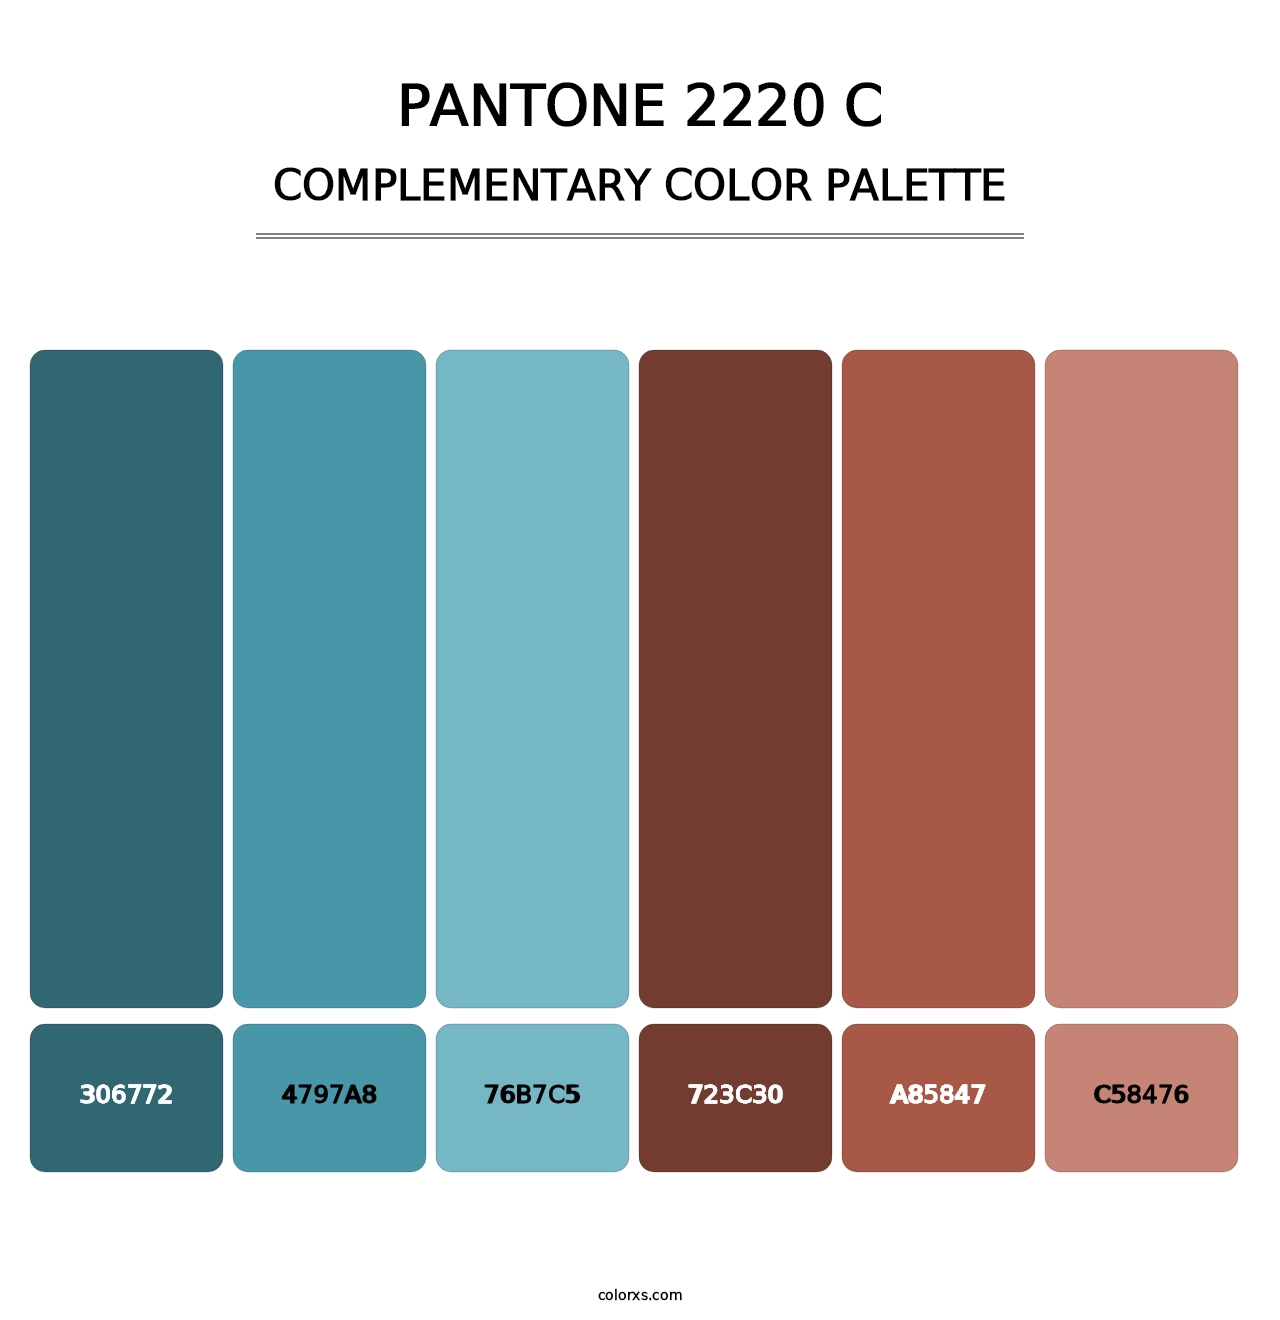 PANTONE 2220 C - Complementary Color Palette